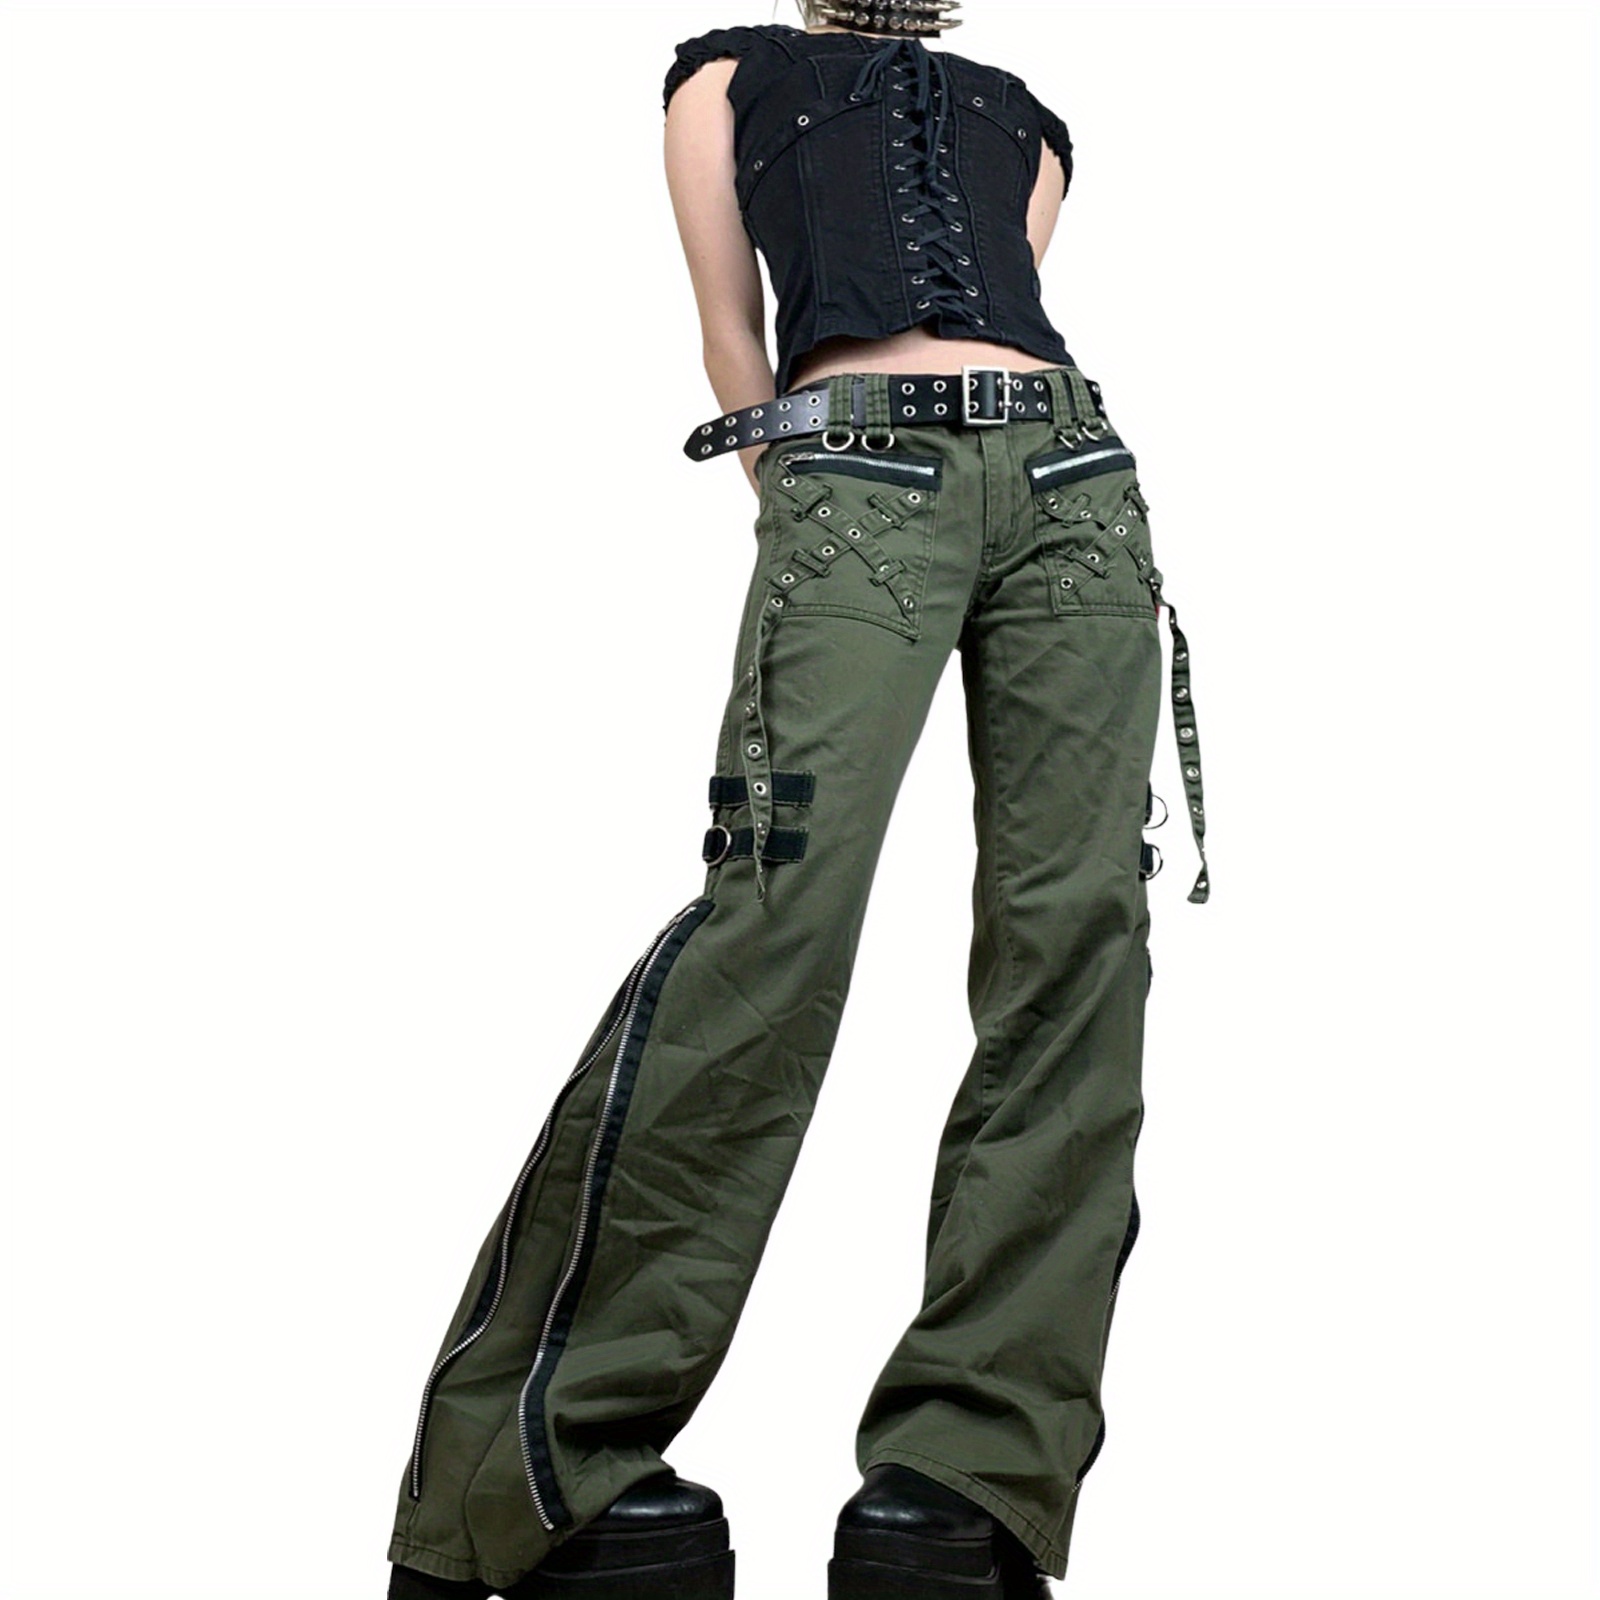 

Women Autumn Cargo Pants, Punk Low-waist Zipper Fly Casual Pants With Pockets For Girls, Green